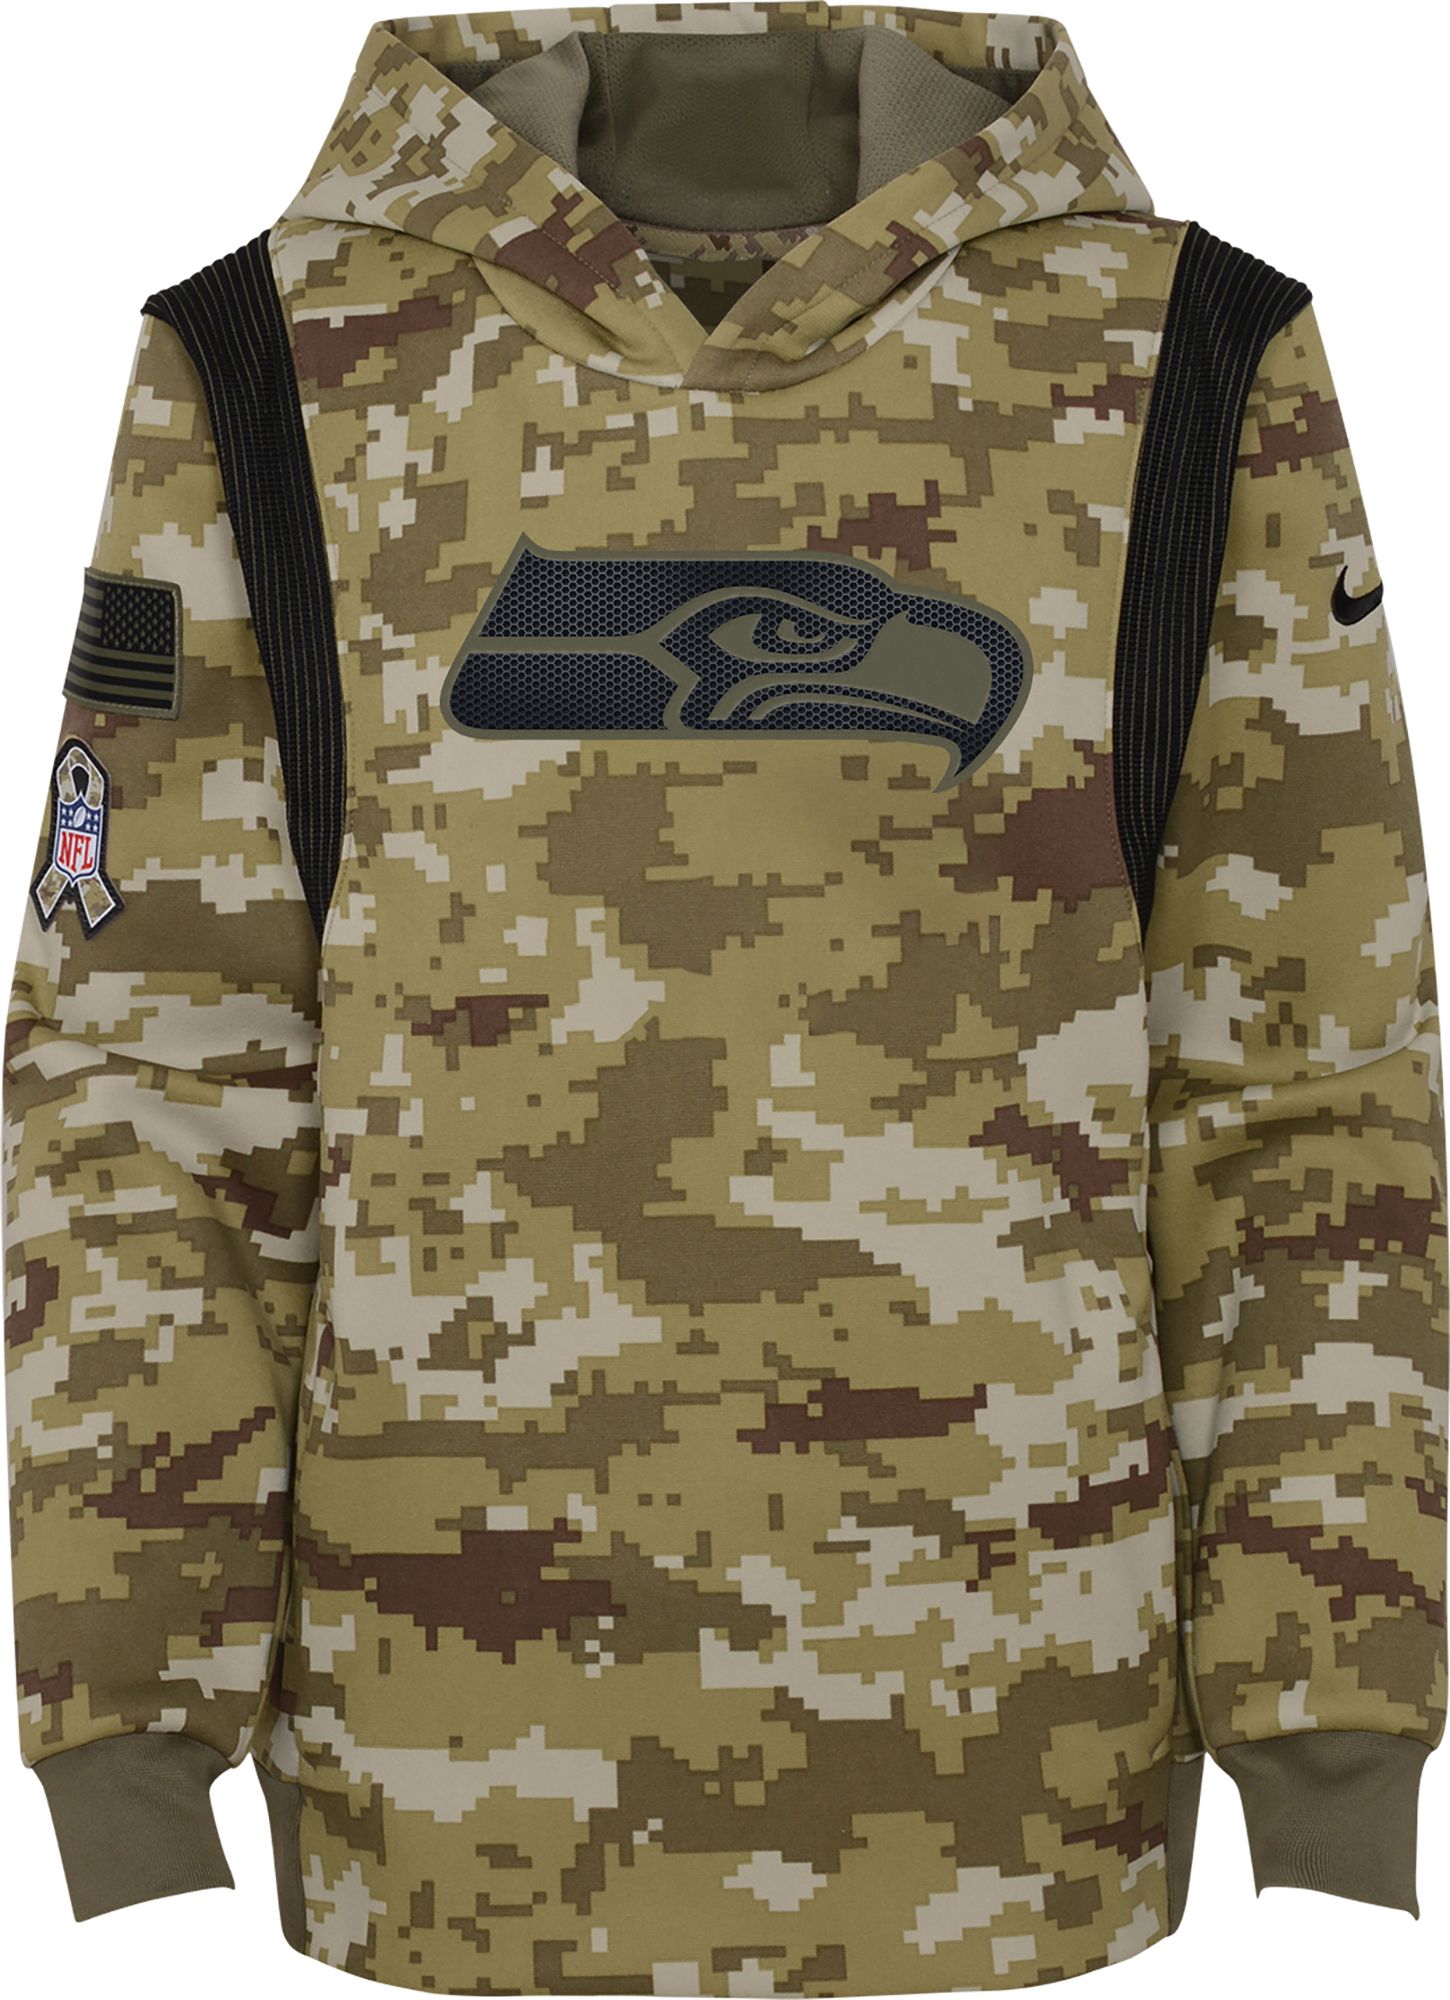 salute to service seahawks jacket